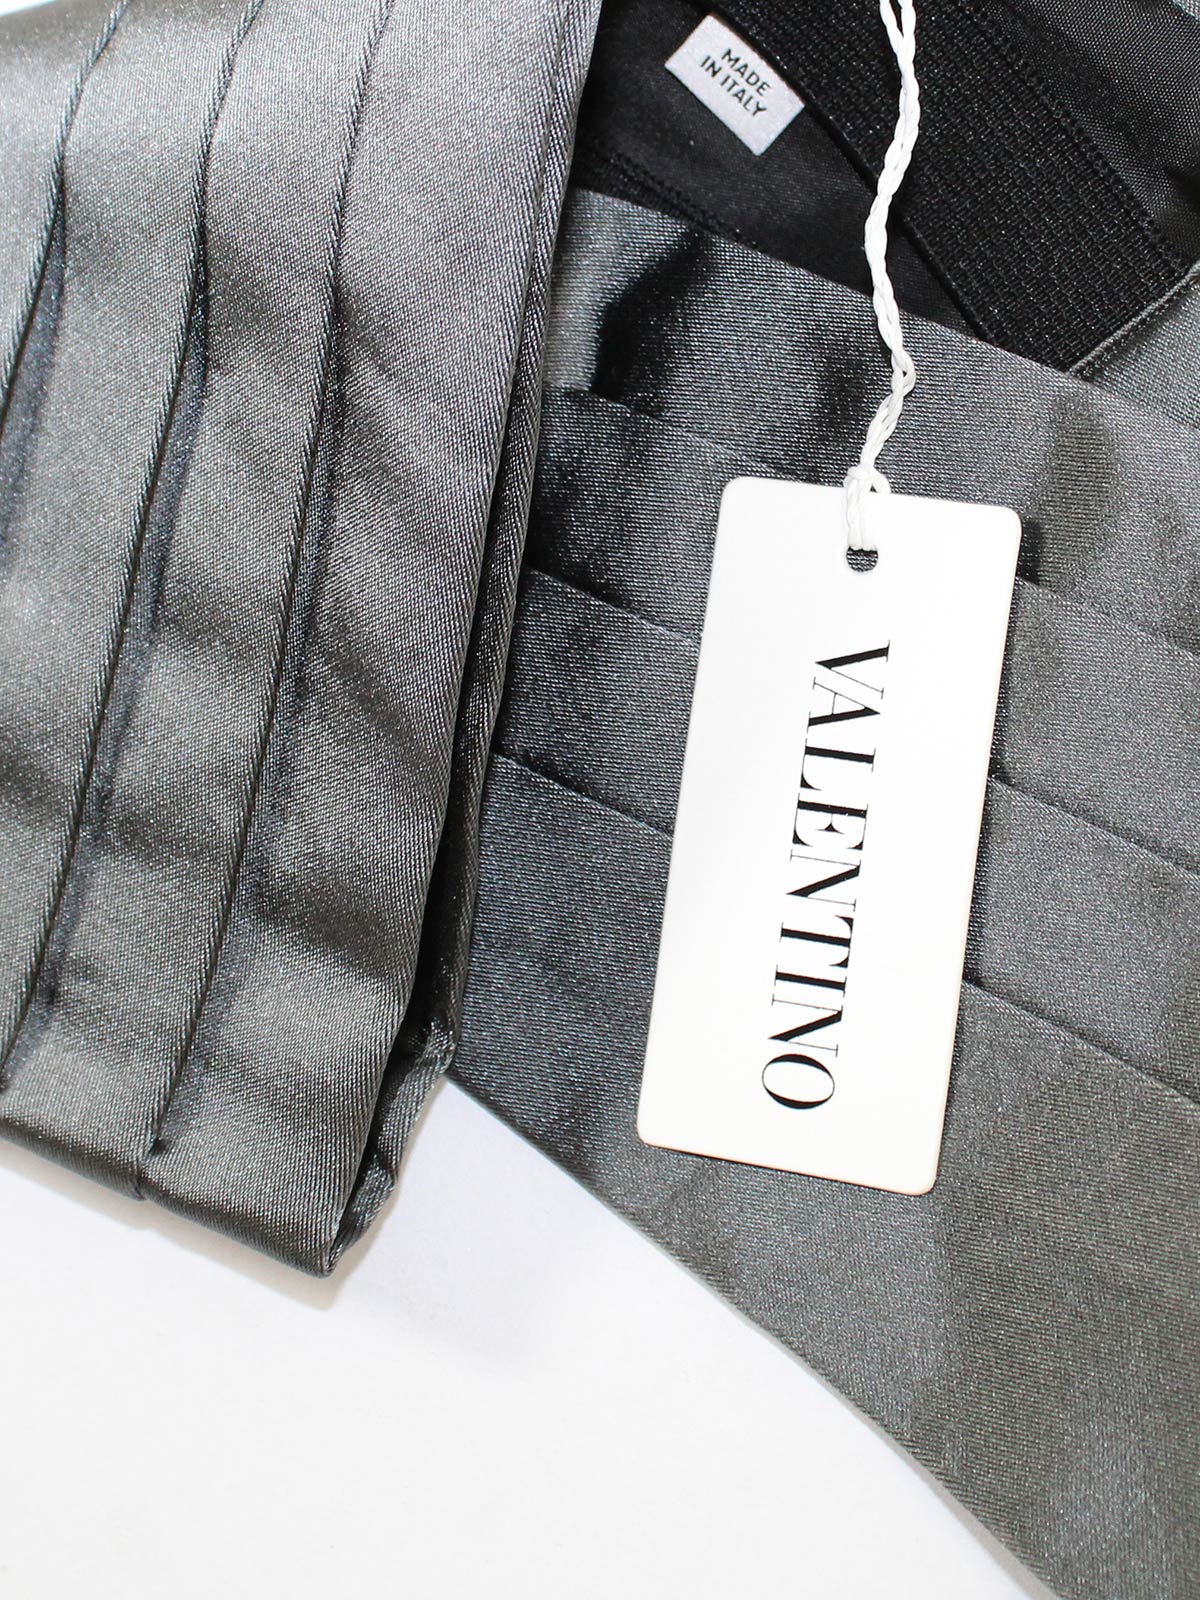 Valentino Cummerbund Solid Charcoal Gray FINAL SALE